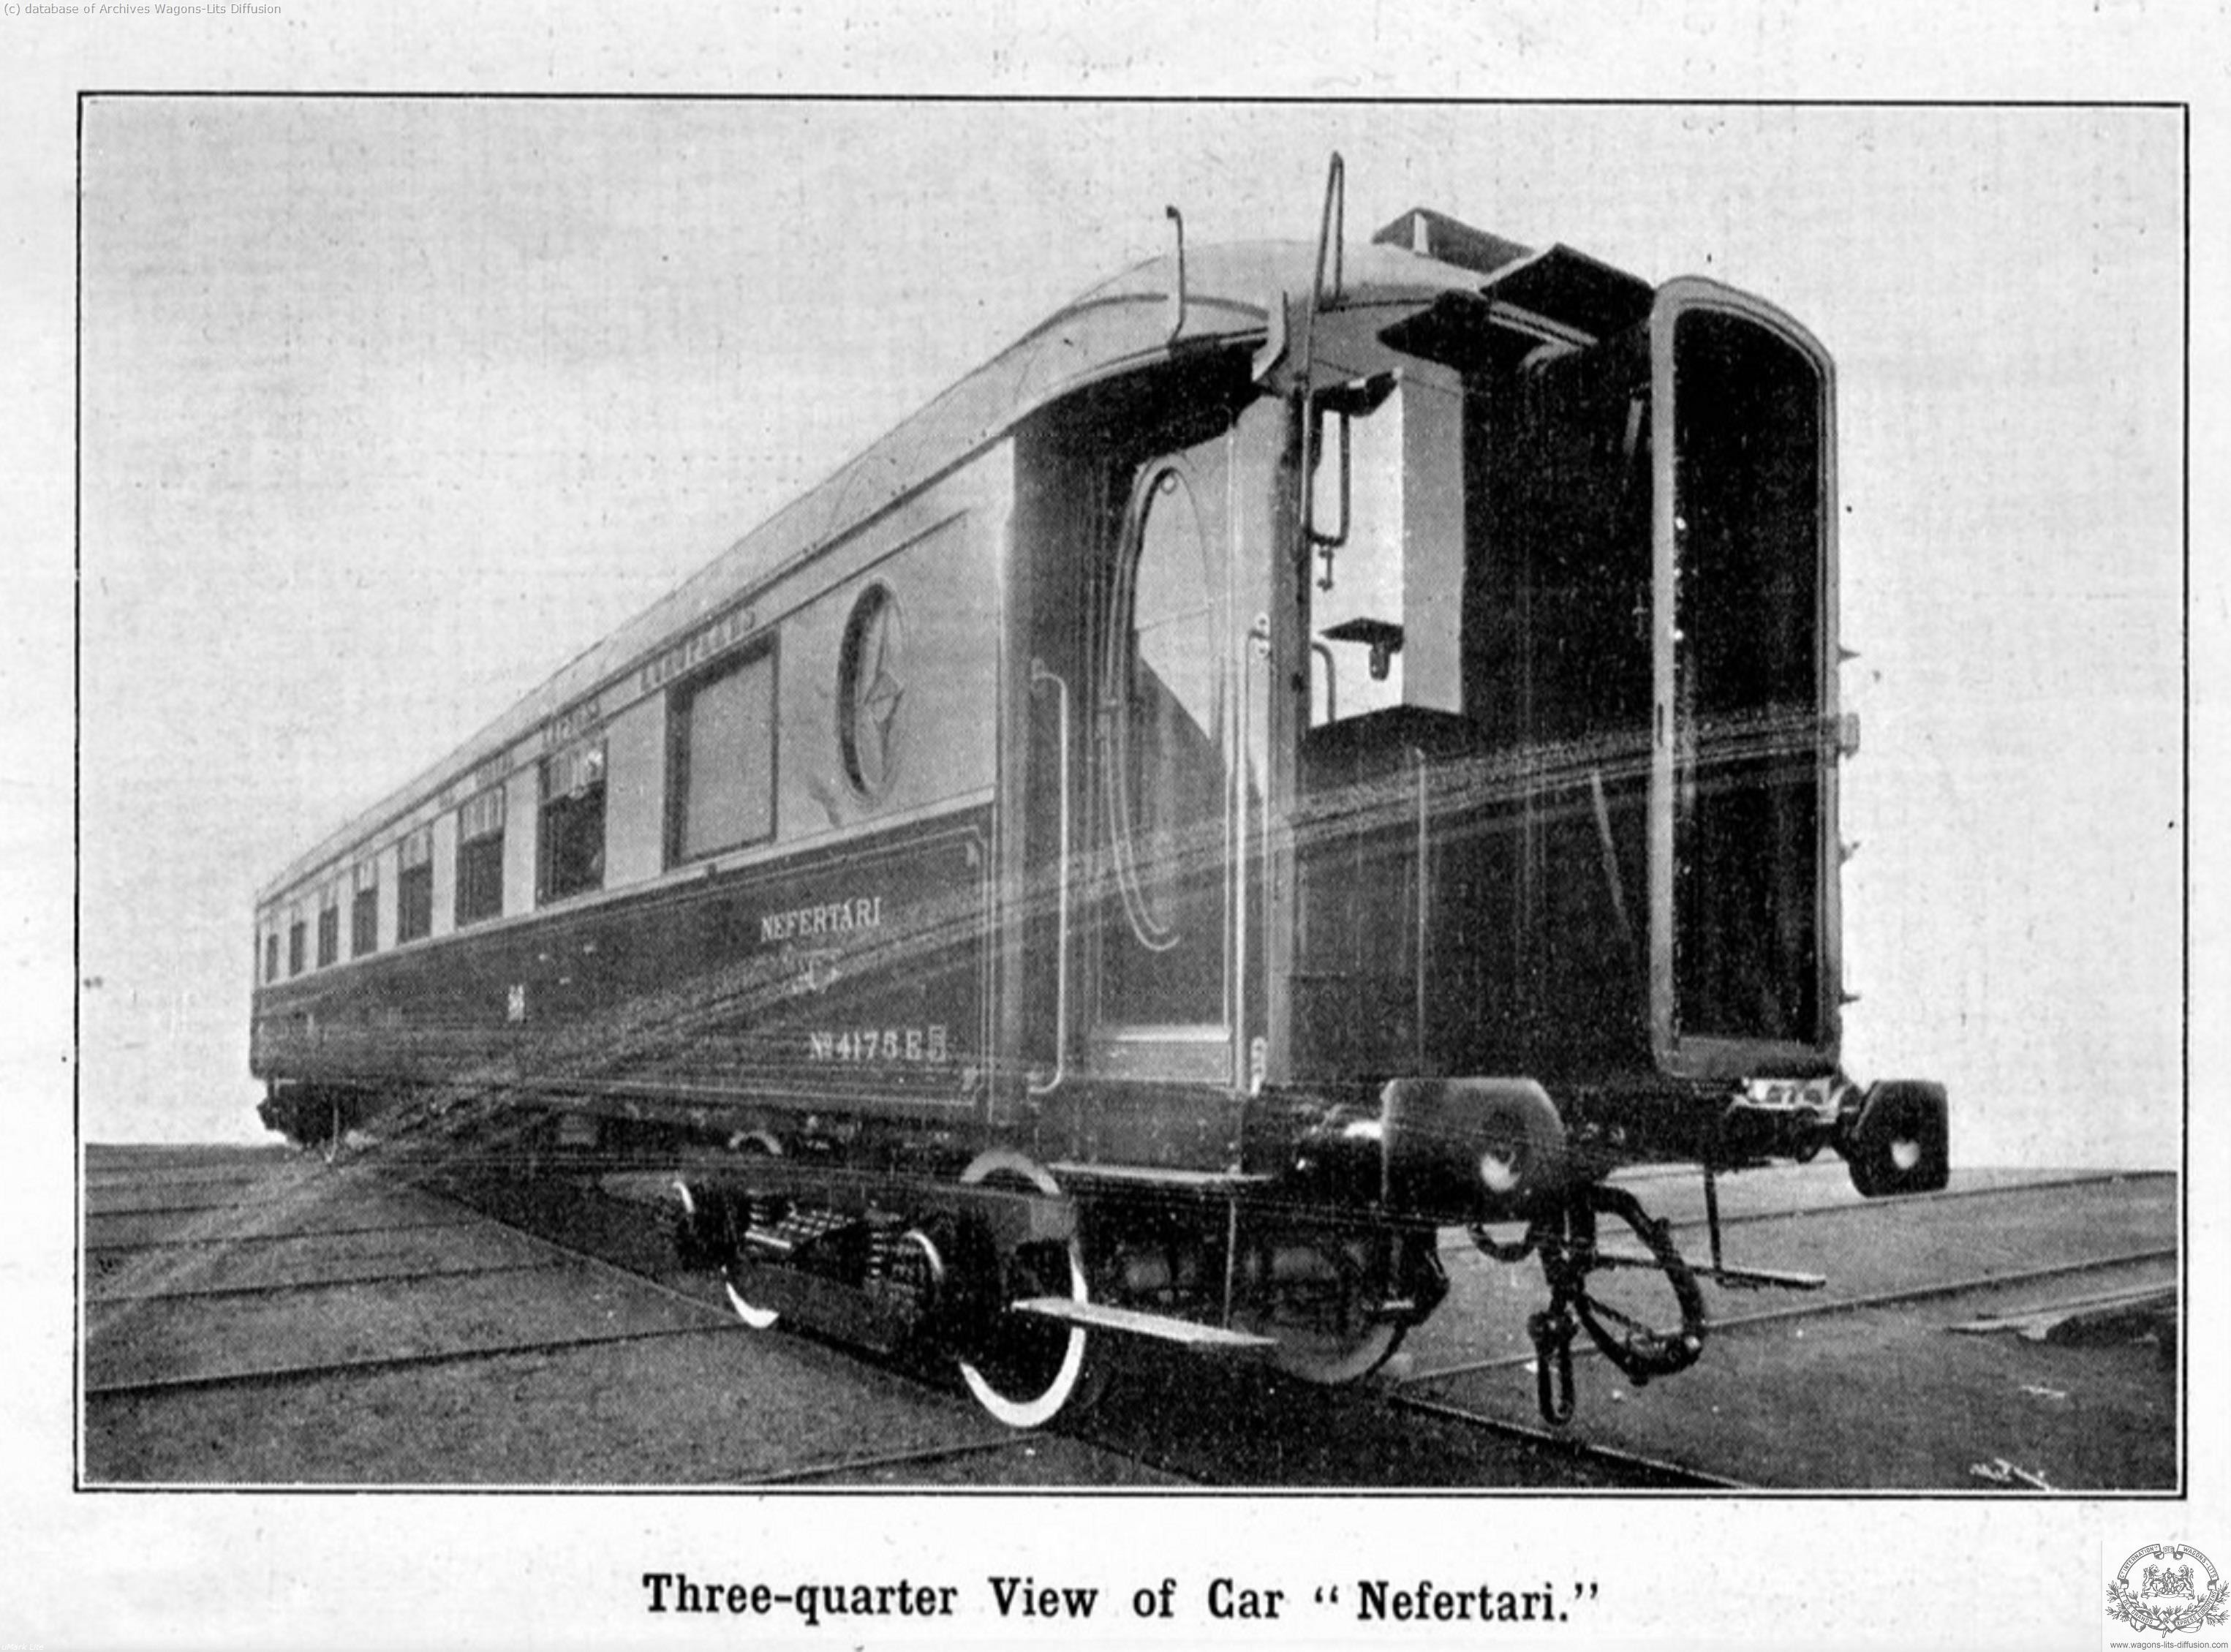 Wl sleeping cars 4175 for service in egypt birmingham railway carriage 1929 4